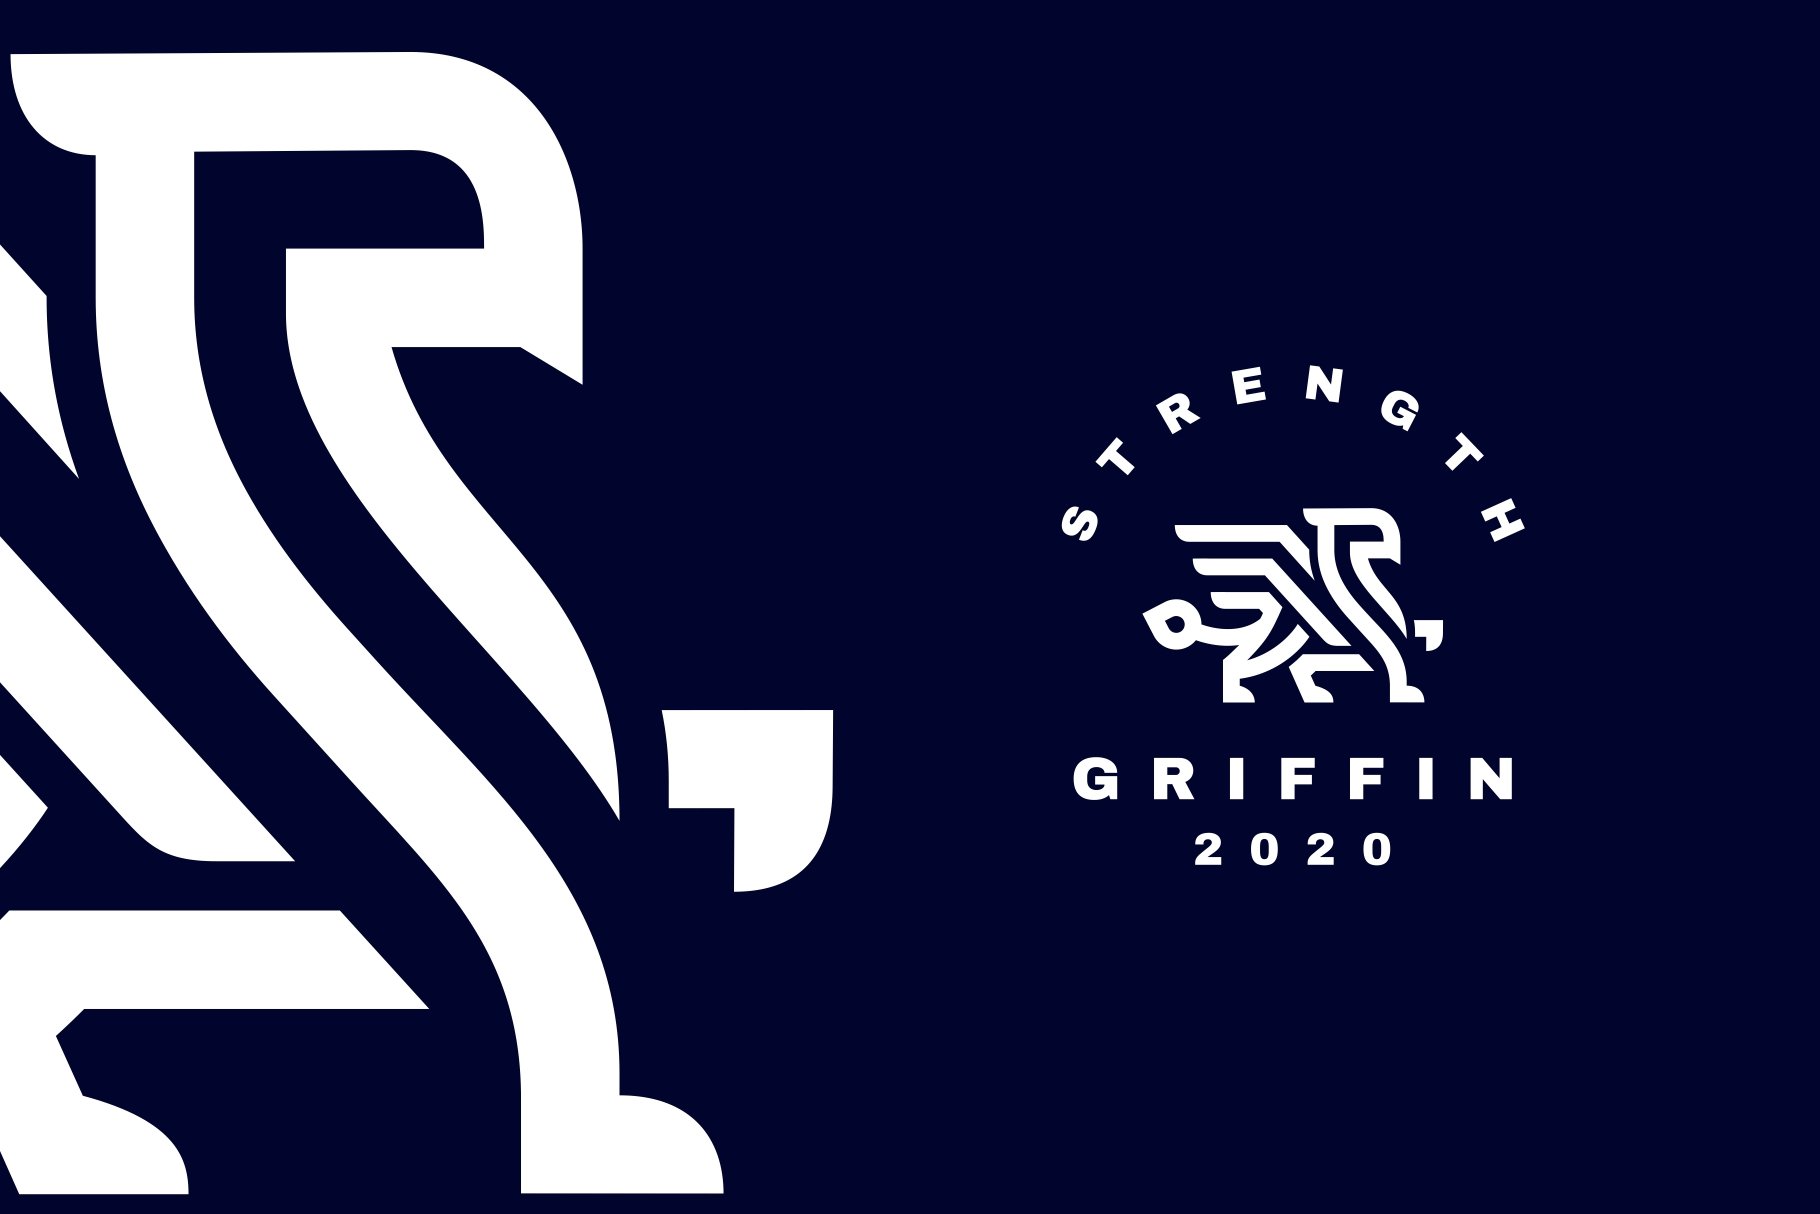 Griffin Line Art Logo cover image.